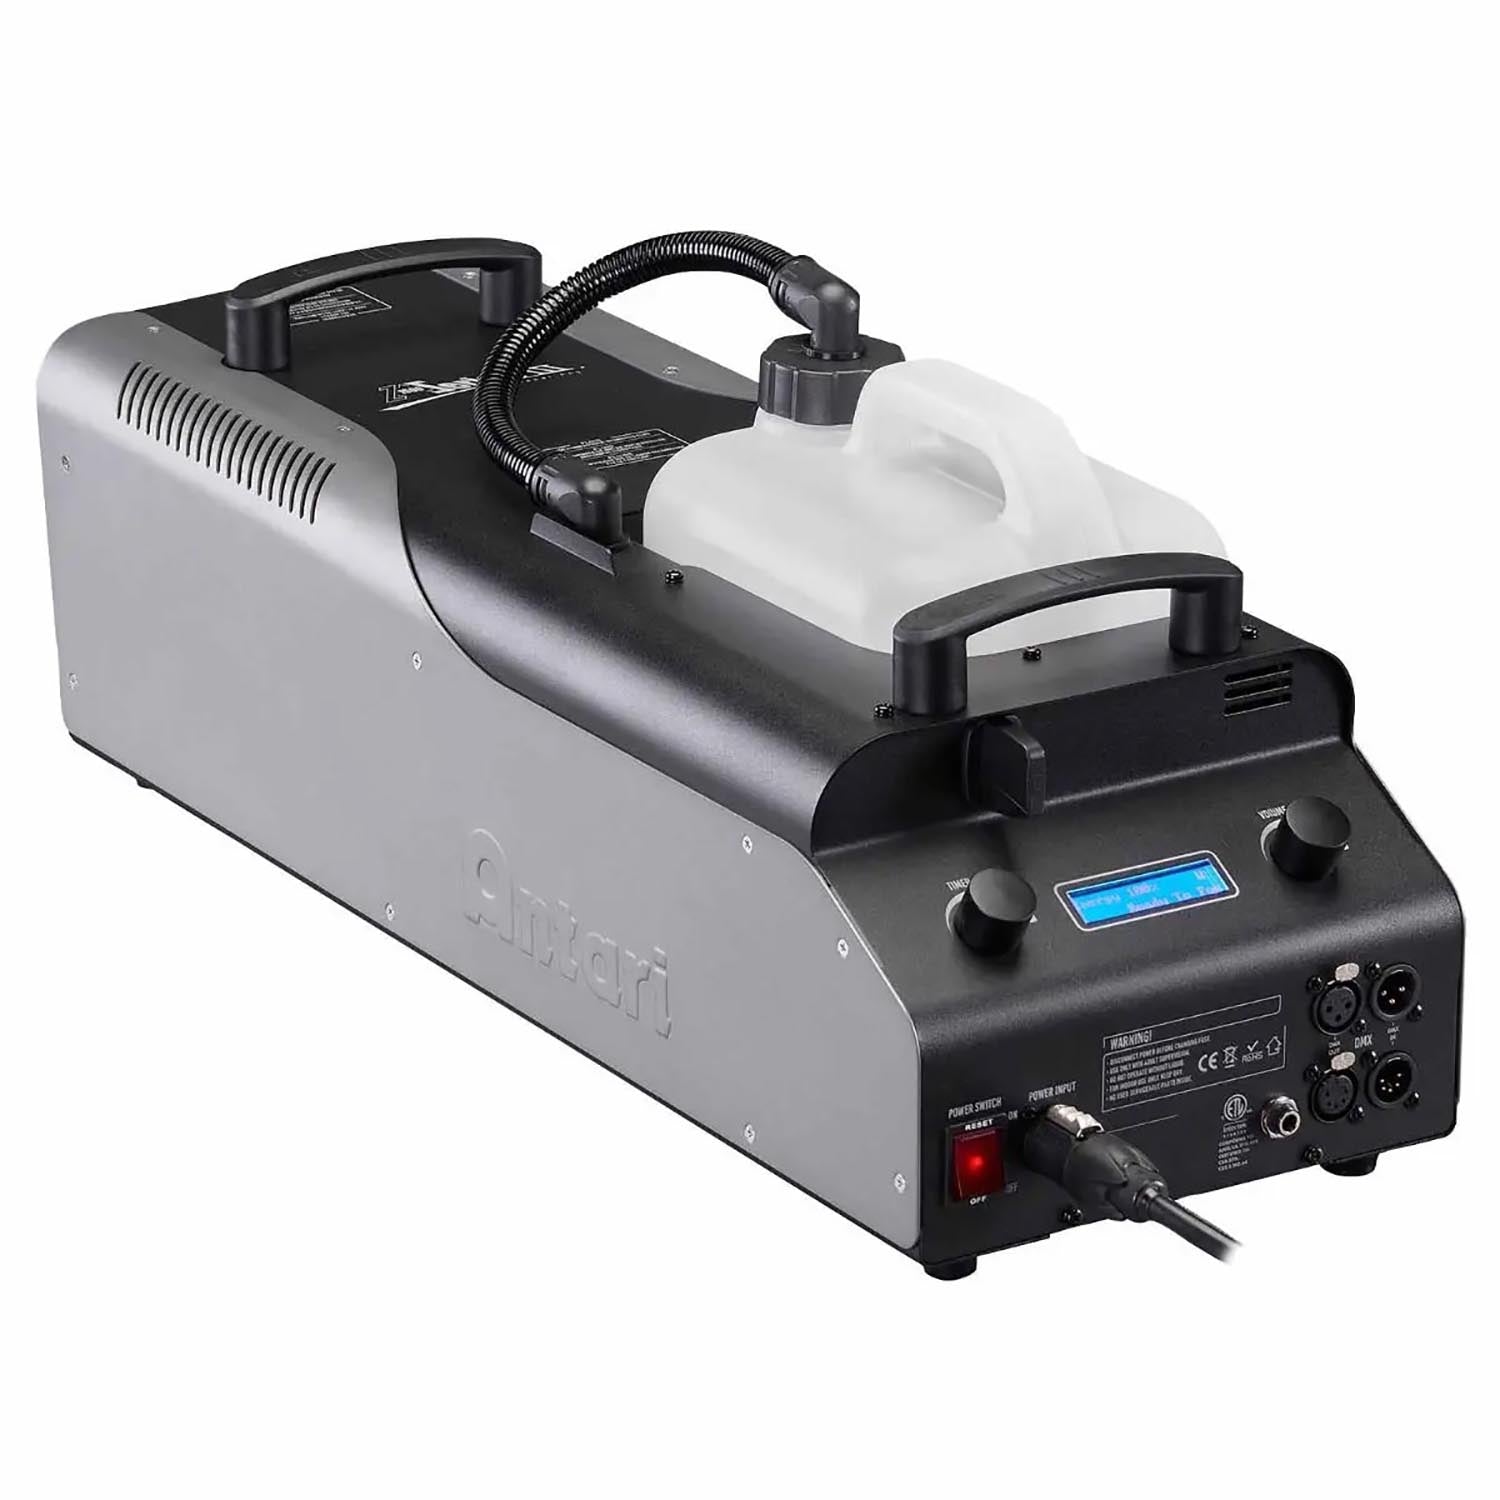 Antari Z-1500 III, 1500W Fog Machine - Hollywood DJ